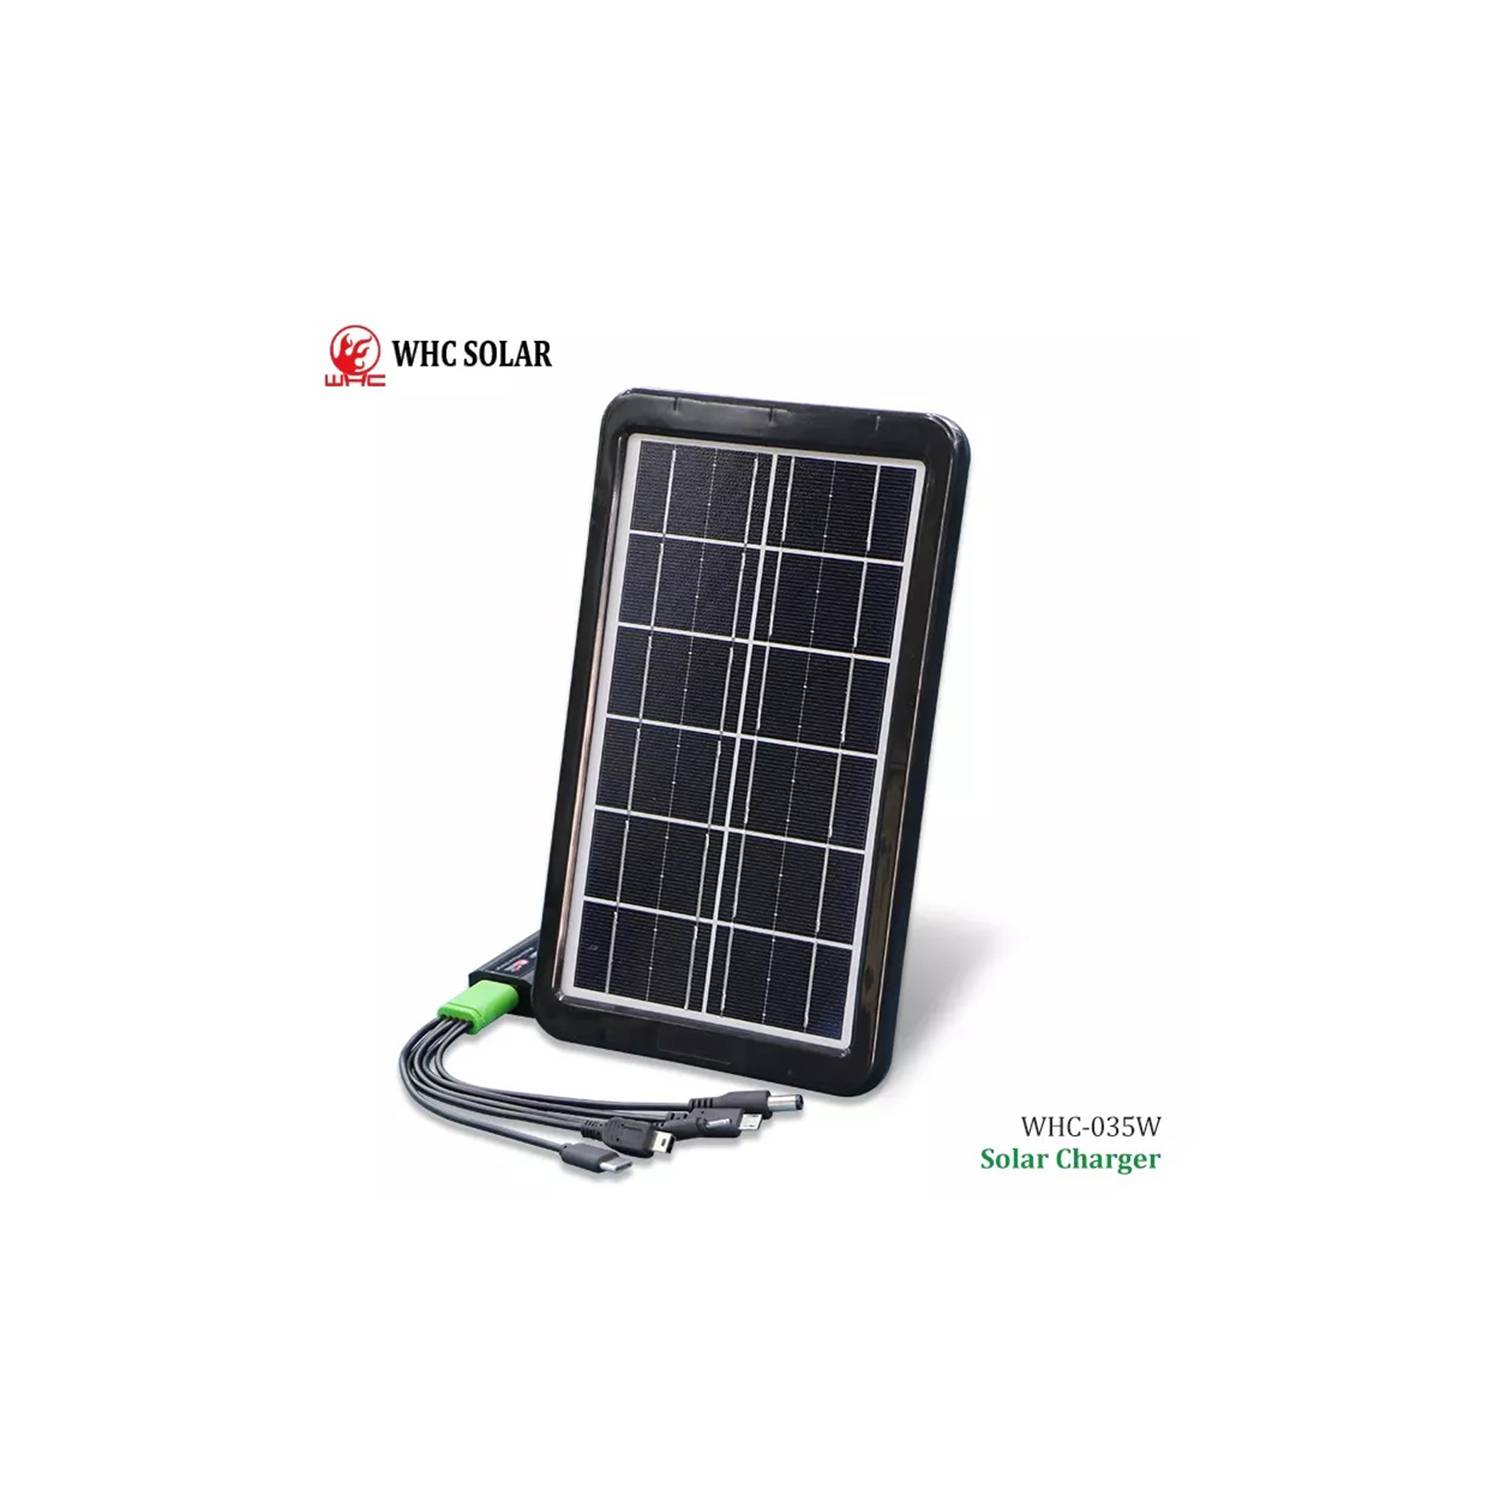 GENERICO Panel solar portátil cargador múltiple 35W varios dispositivos